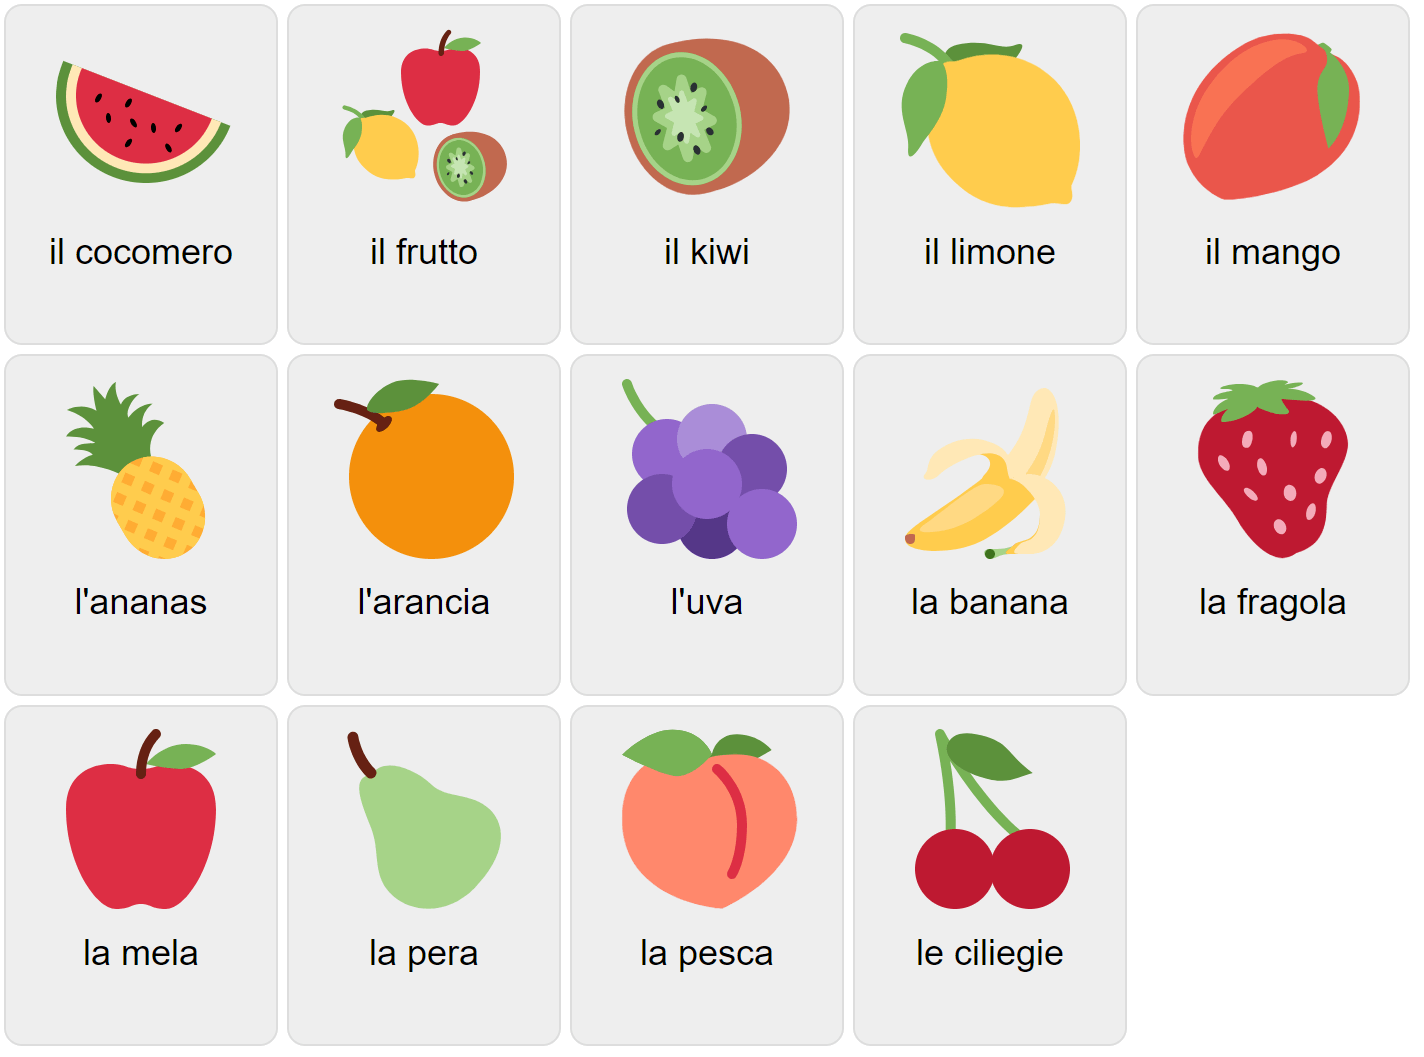 Fruits in Italian